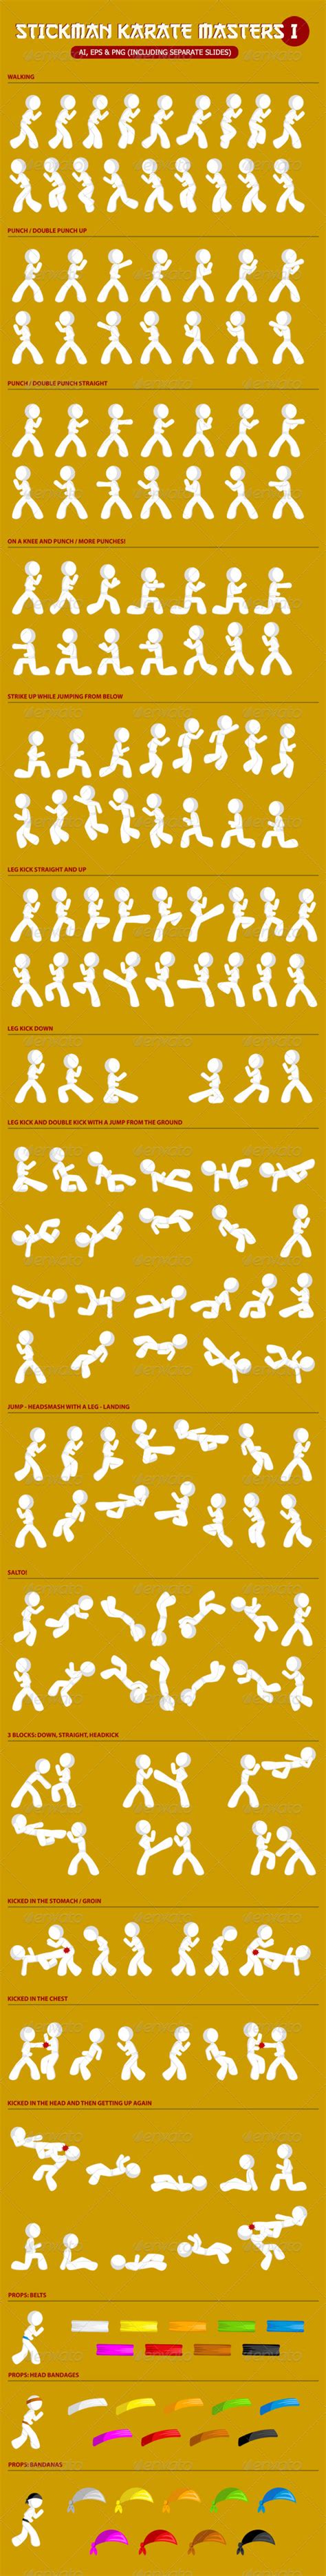 Stickman Karate Masters Sprite Sheet Animation Tutorial Pixel Art